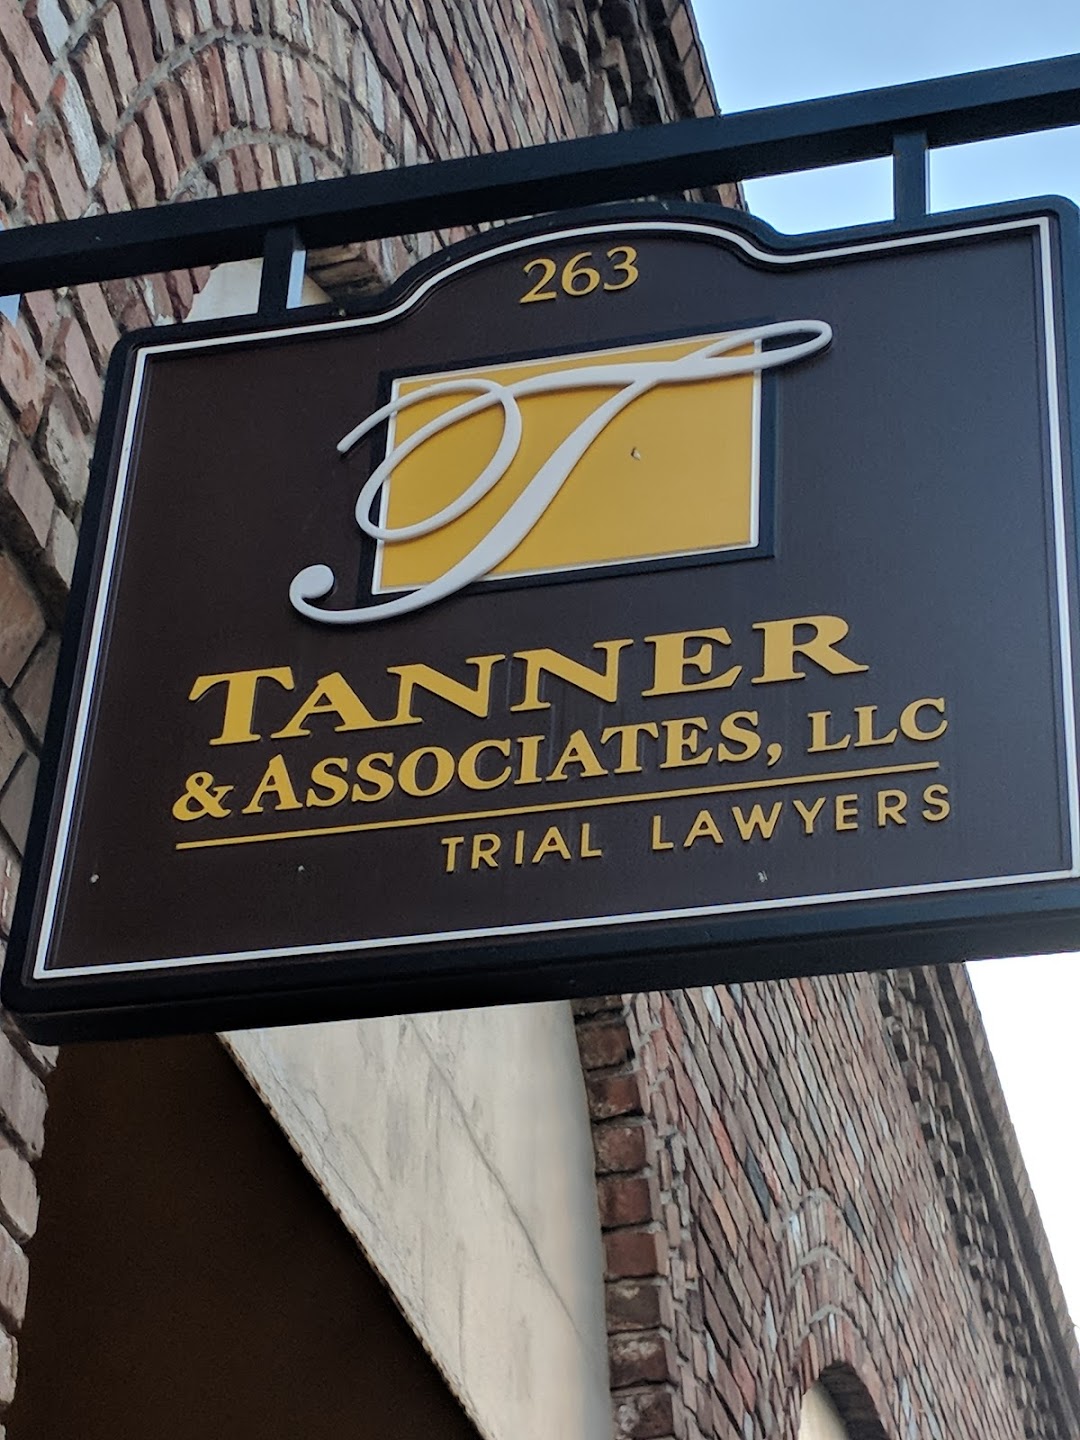 Tanner & Associates